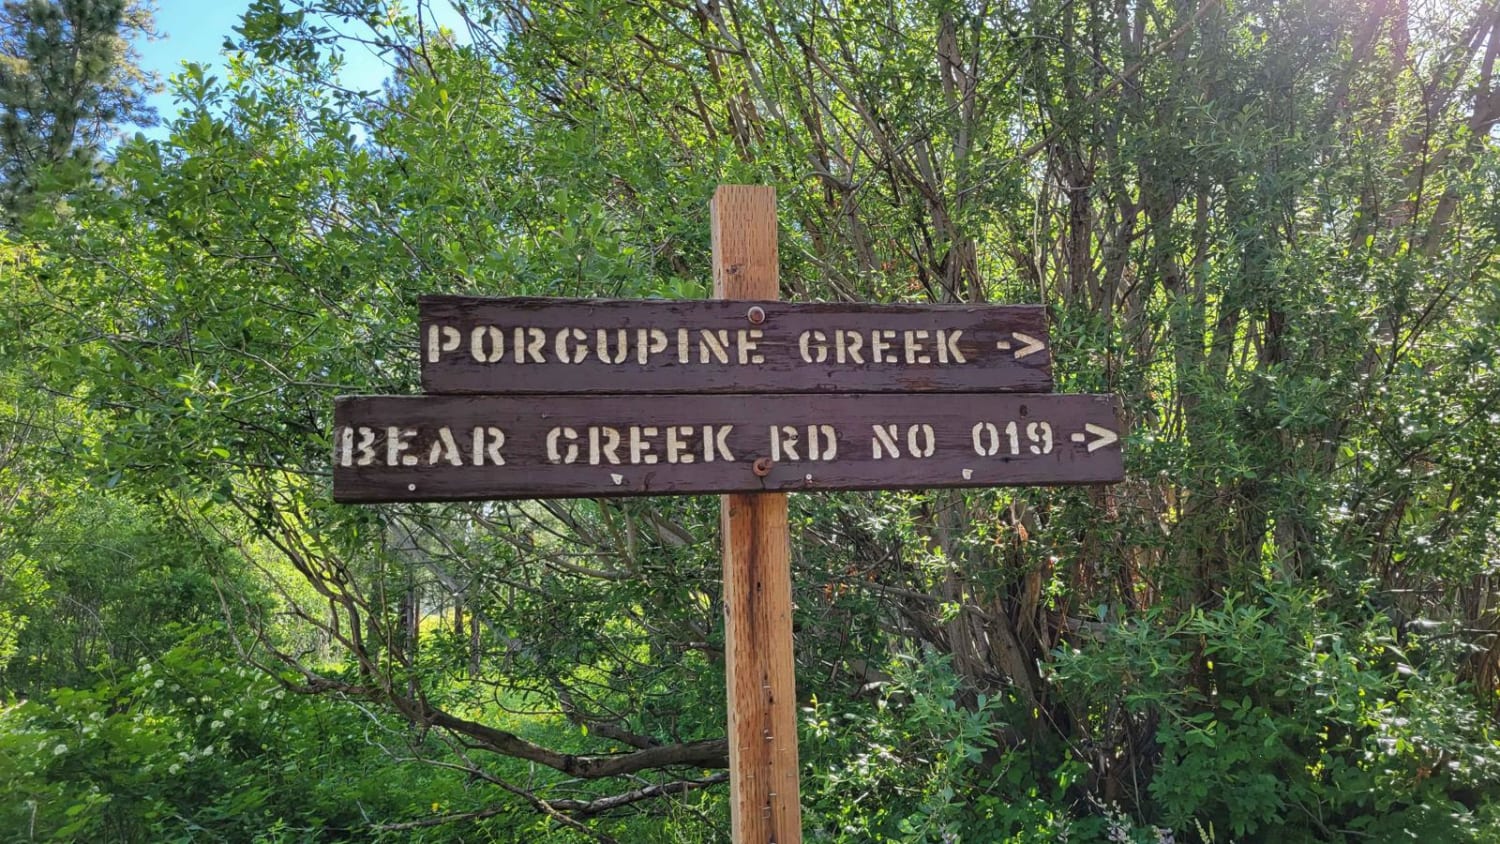 NR 019 - Bear Creek Saddle